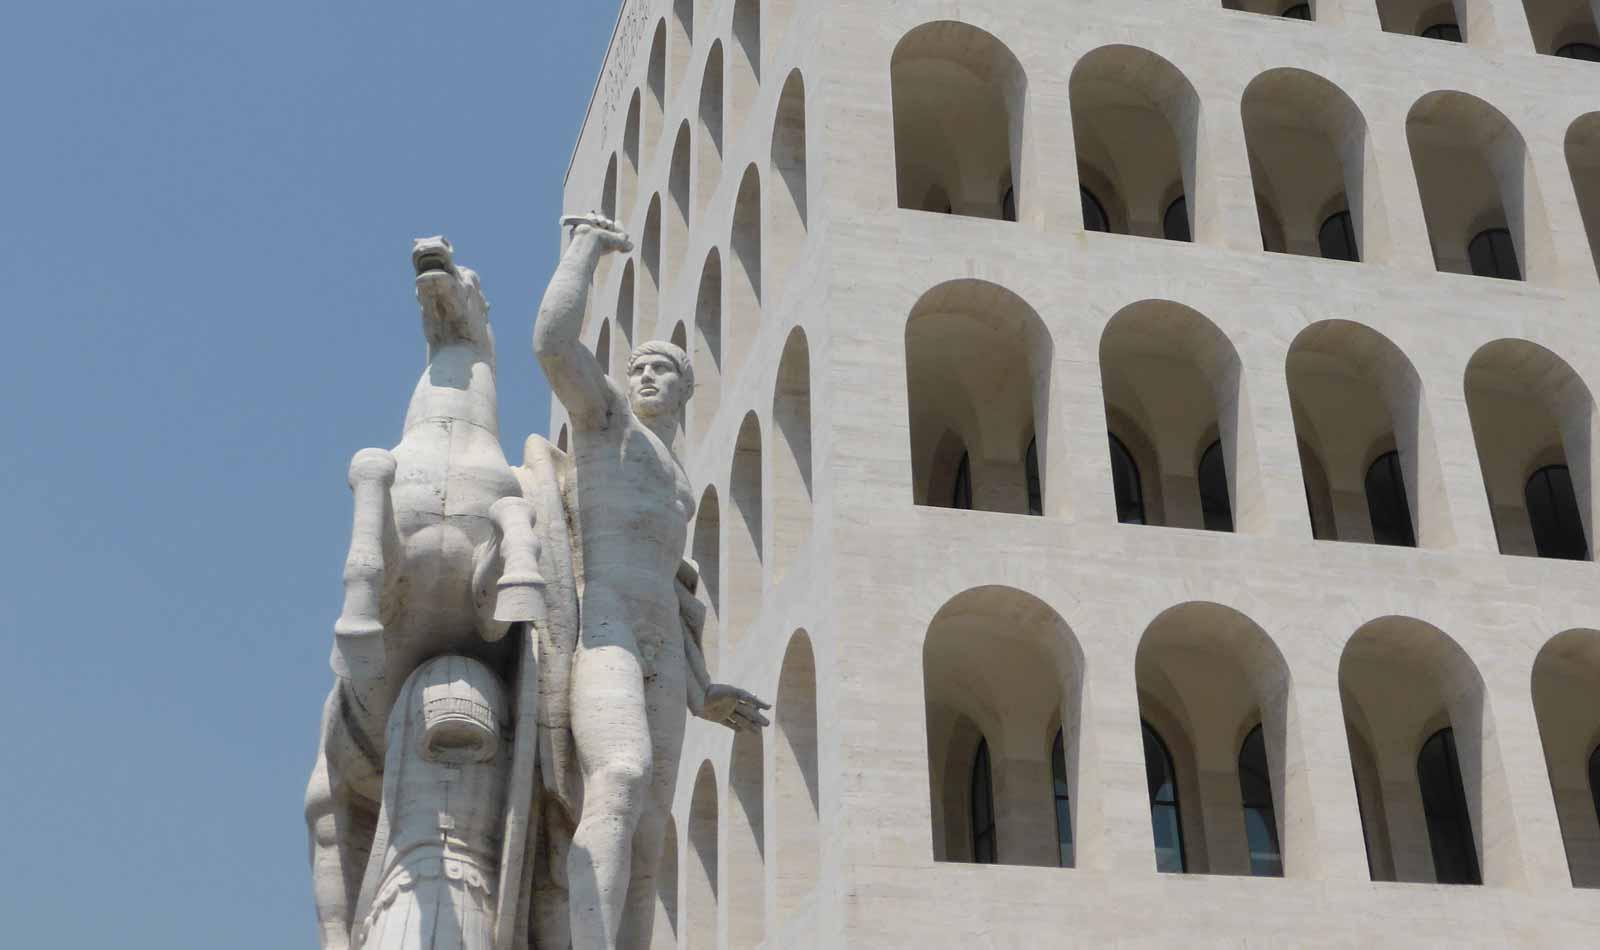 Scholars unlock secrets of long-forgotten Mussolini document hidden in  Fascist obelisk in Rome